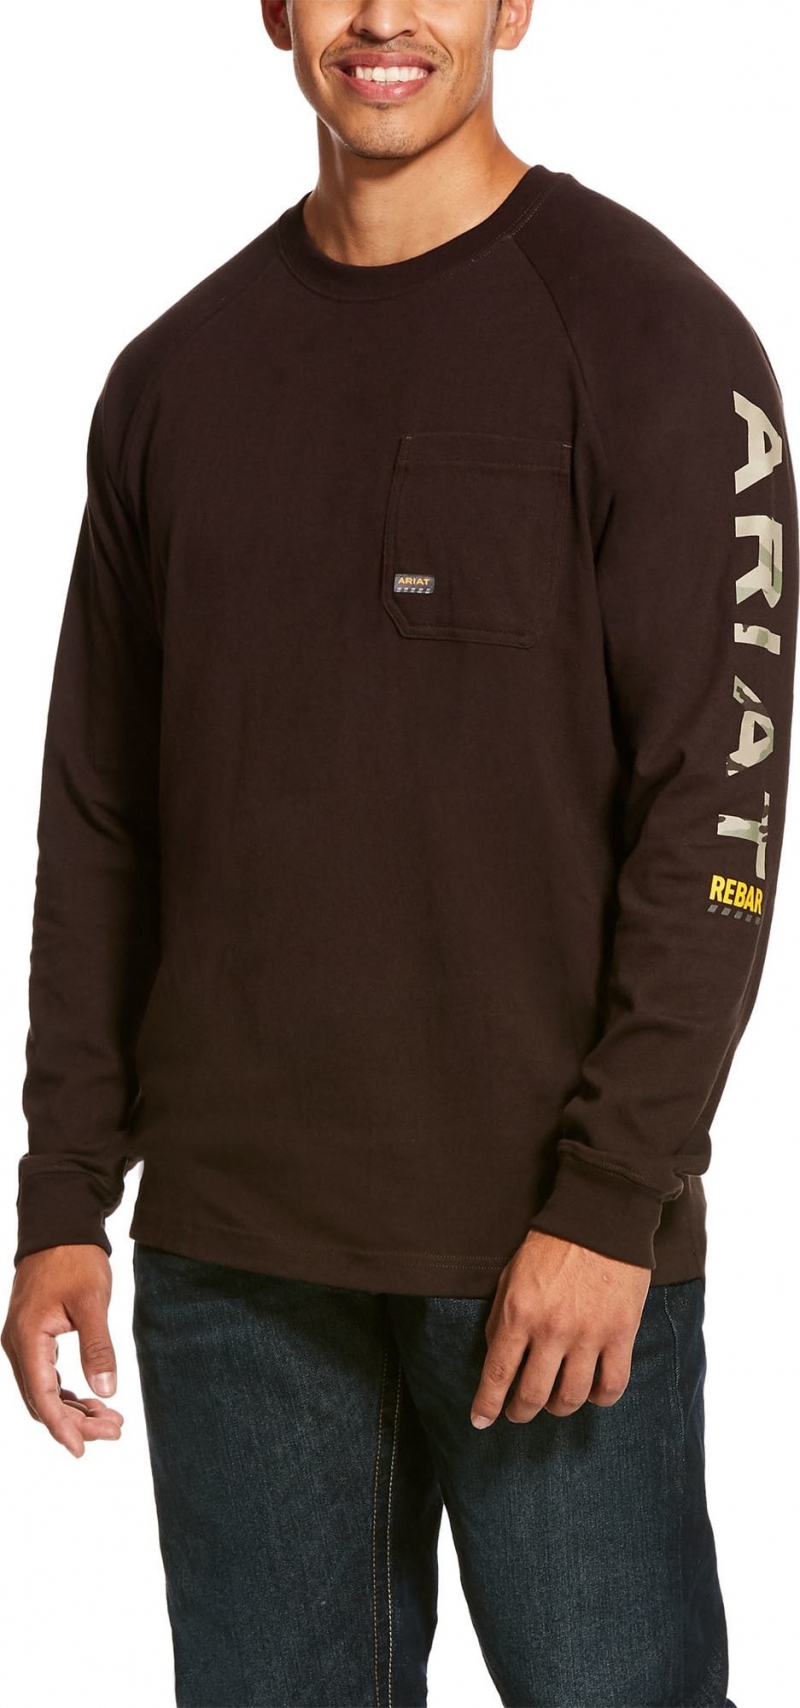 Ariat Rebar Cotton Strong Graphic Logo Crewneck Pocket L/S T-Shirt - Dark Brown